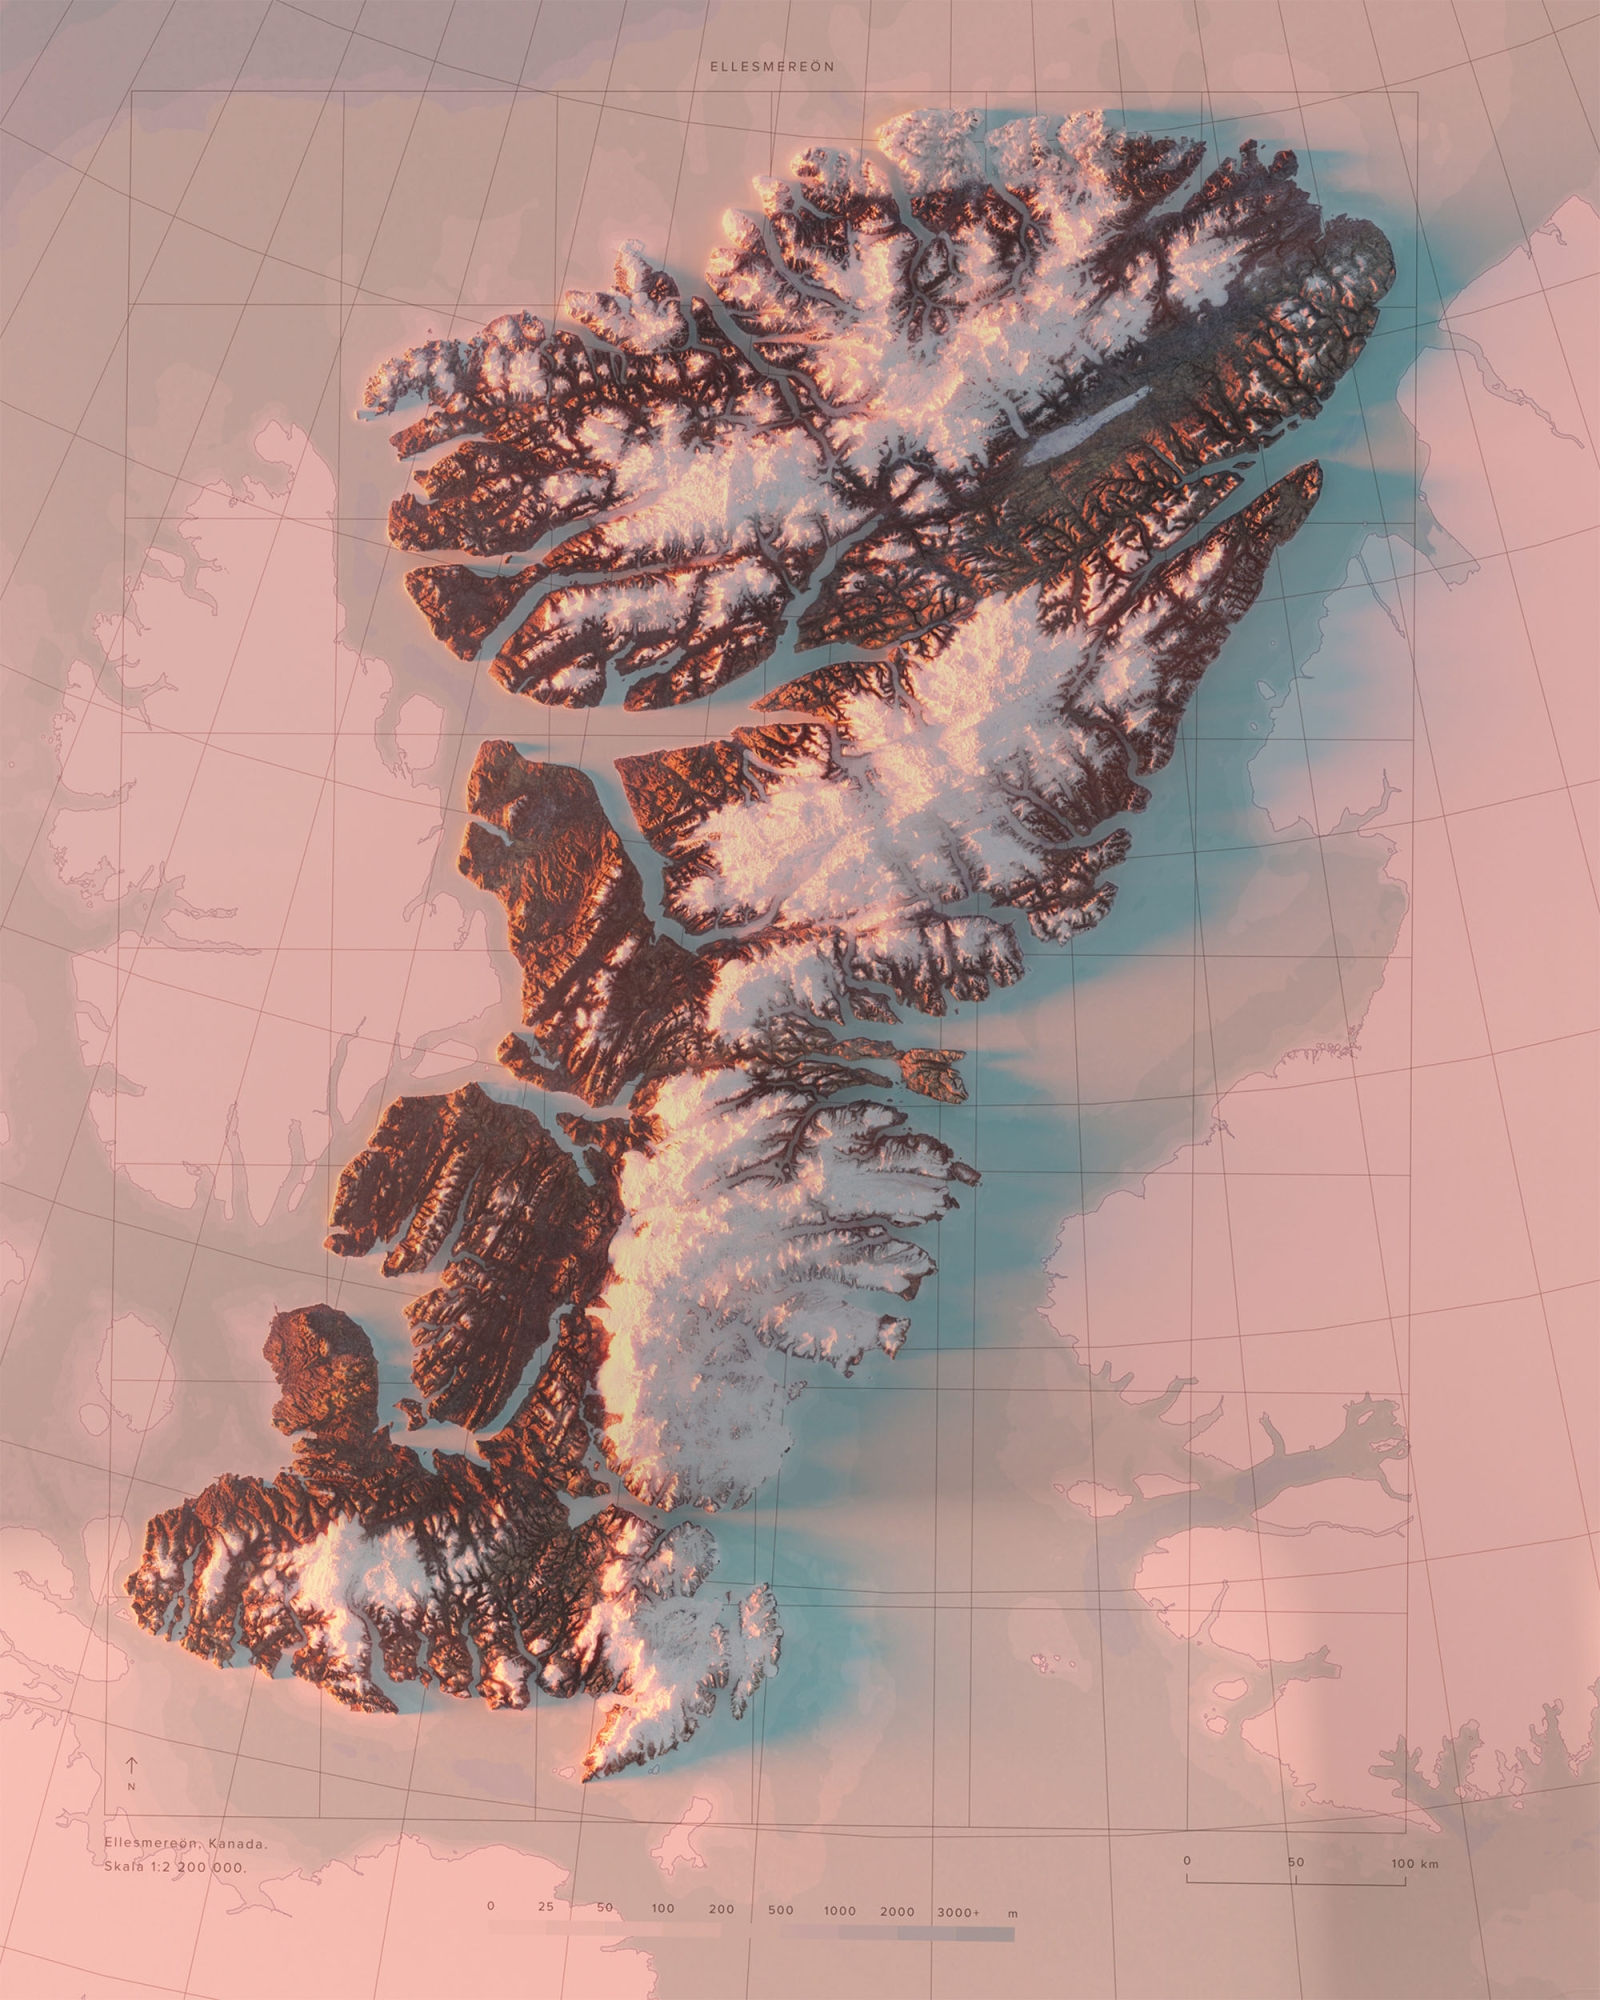 Ellesmereön topografisk karta, detaljbild